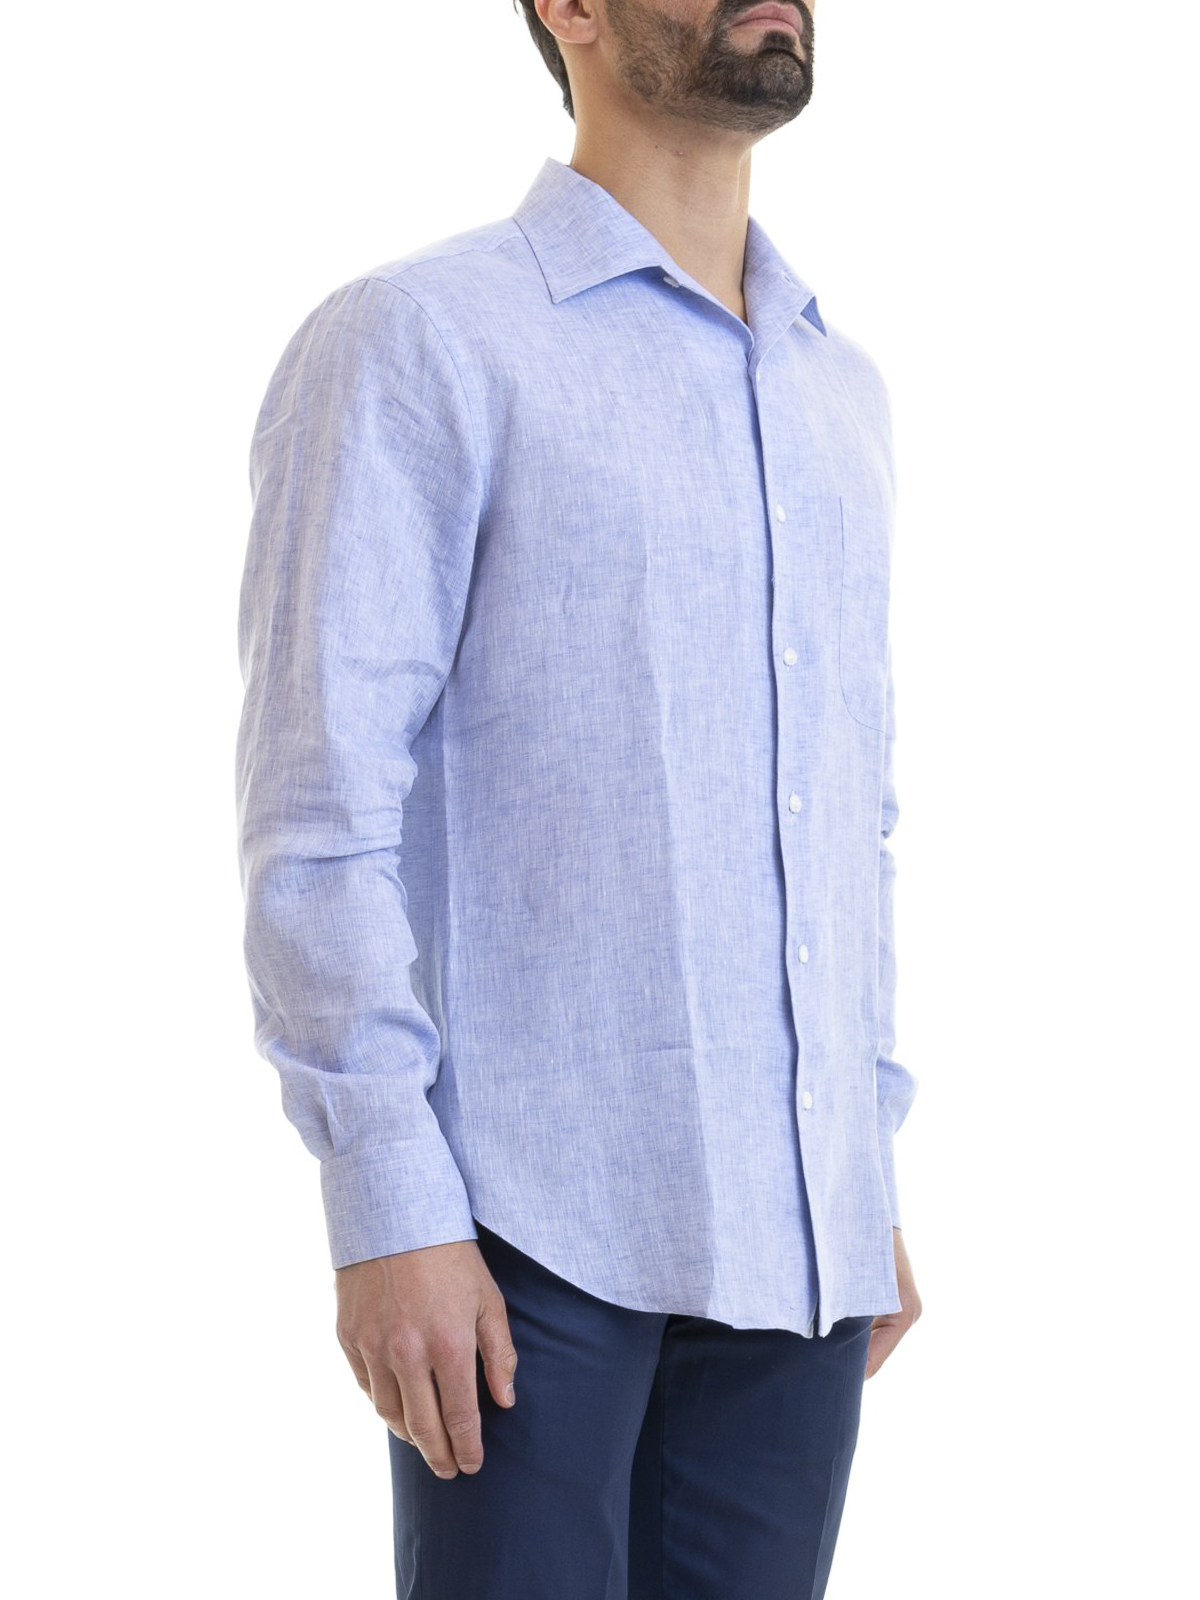 ondernemen barbecue smal Shirts Brioni - Light blue linen shirt - SCAS0LP81174900 | iKRIX.com